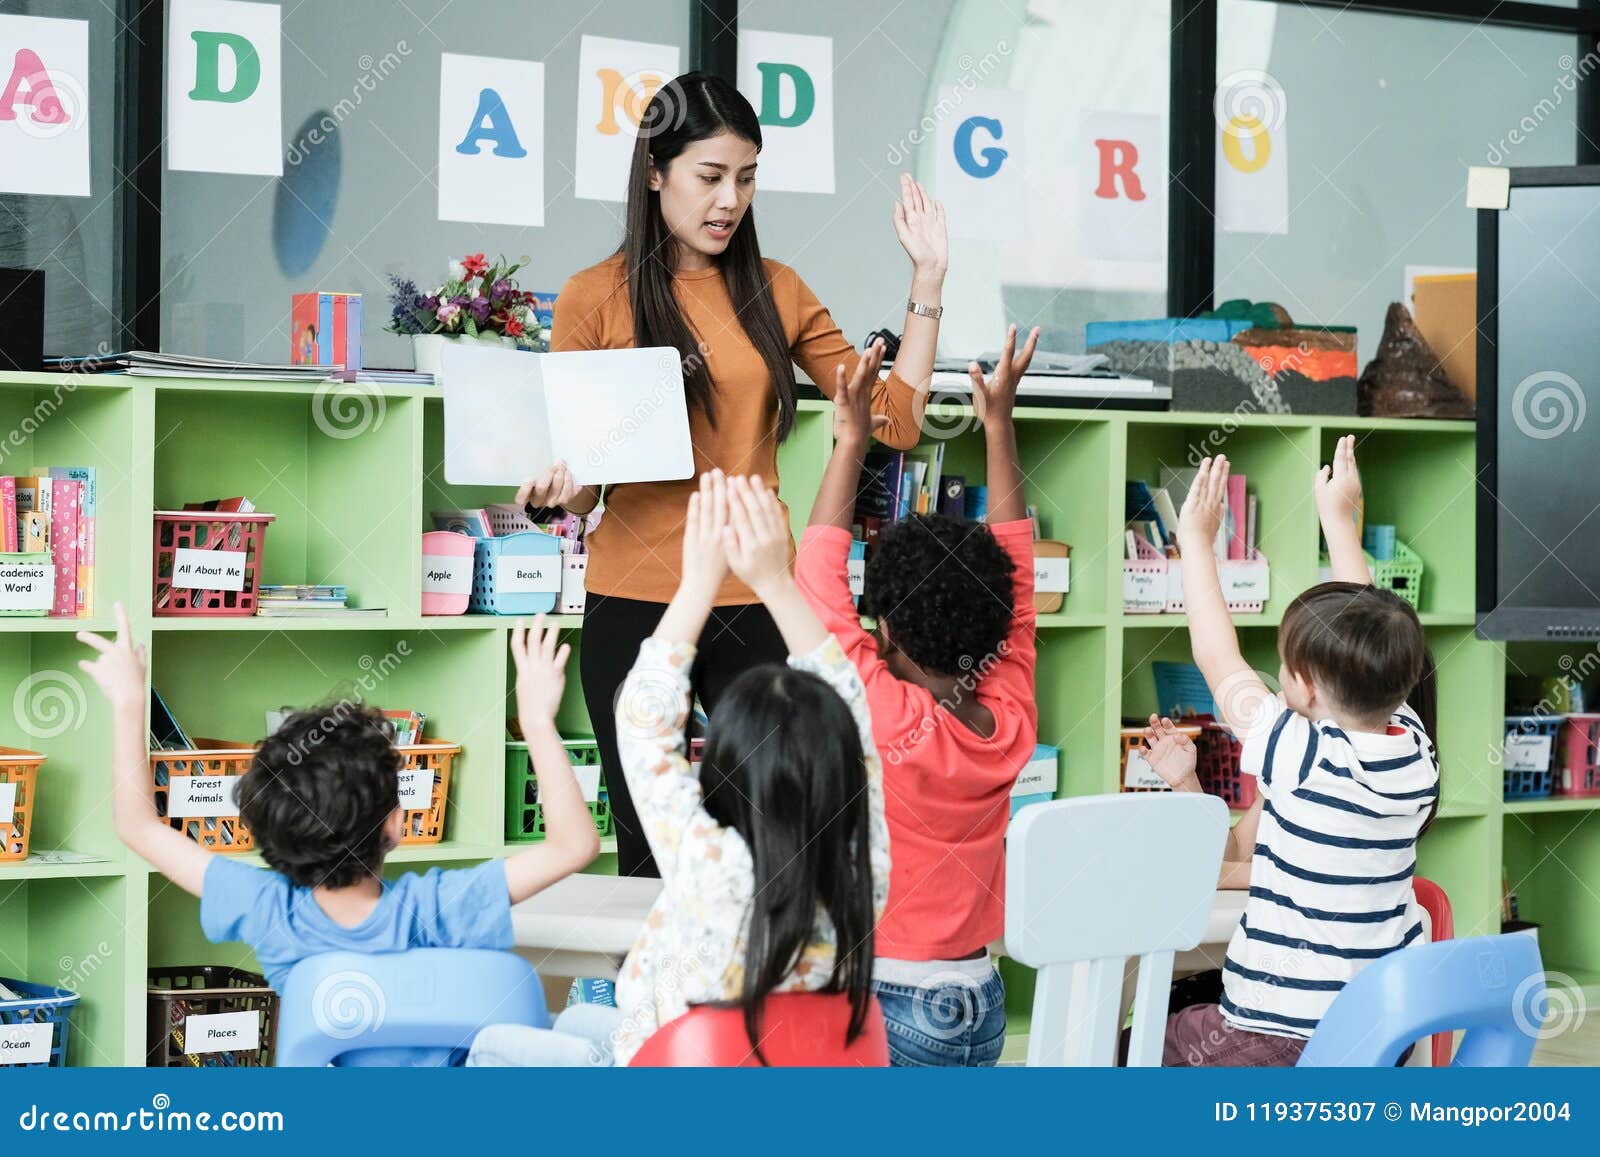 young asian woman teacher teaching kids in kindergarten classroom, preschool education concept